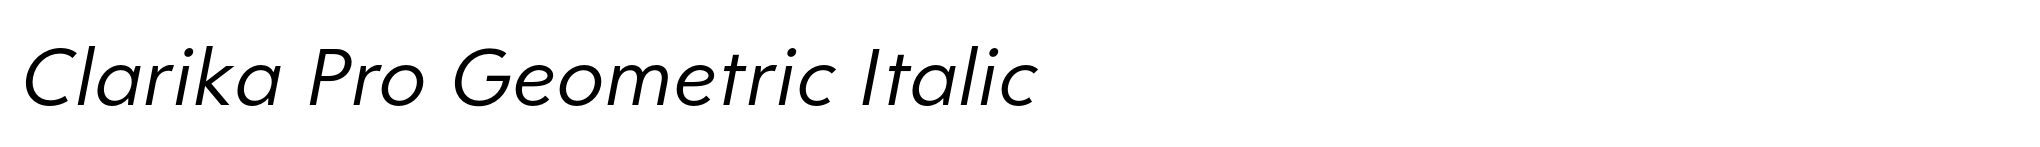 Clarika Pro Geometric Italic image